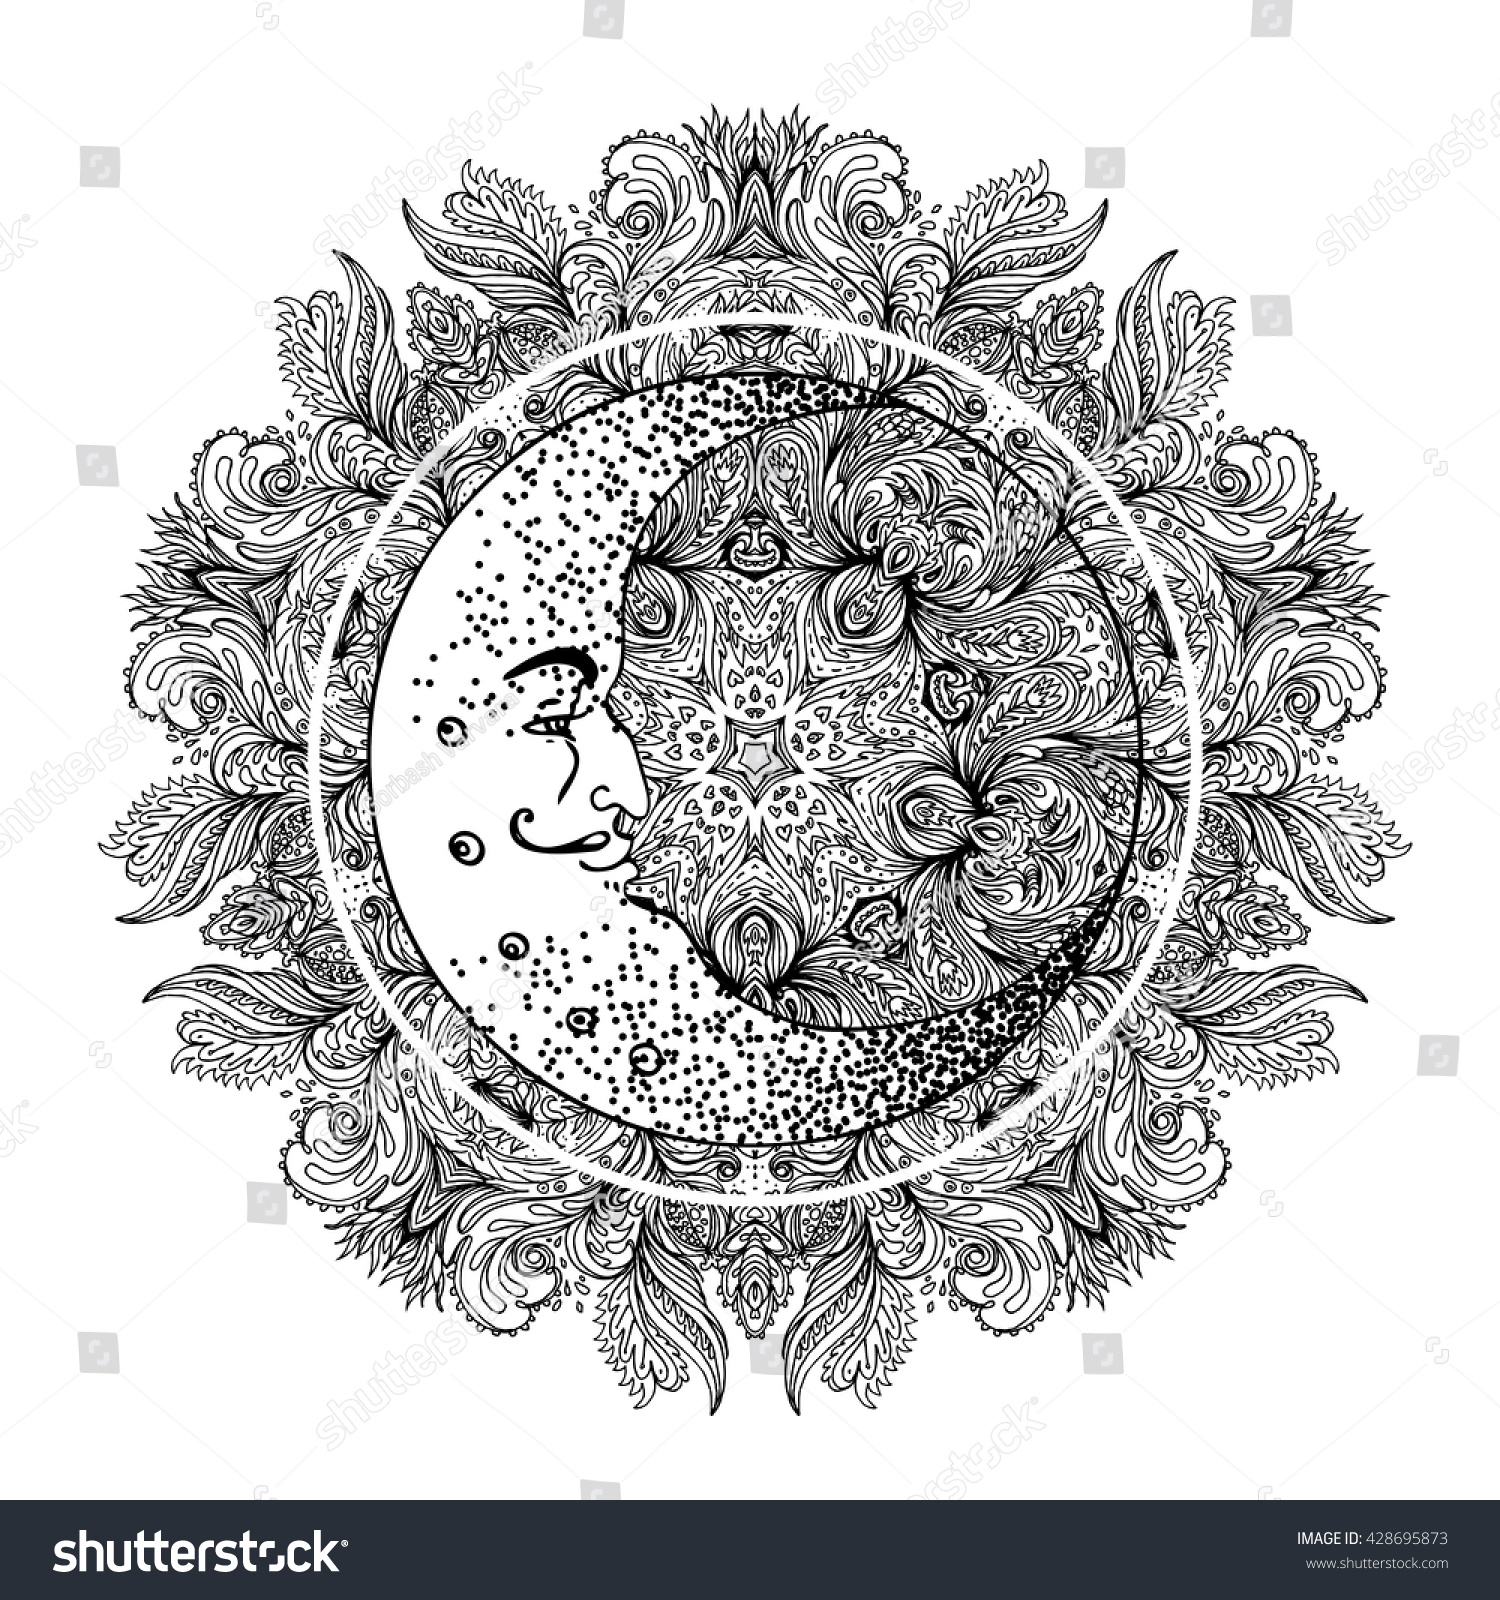 Download Blackwork Tattoo Flash Crescent Moon Over Mandala Stock ...